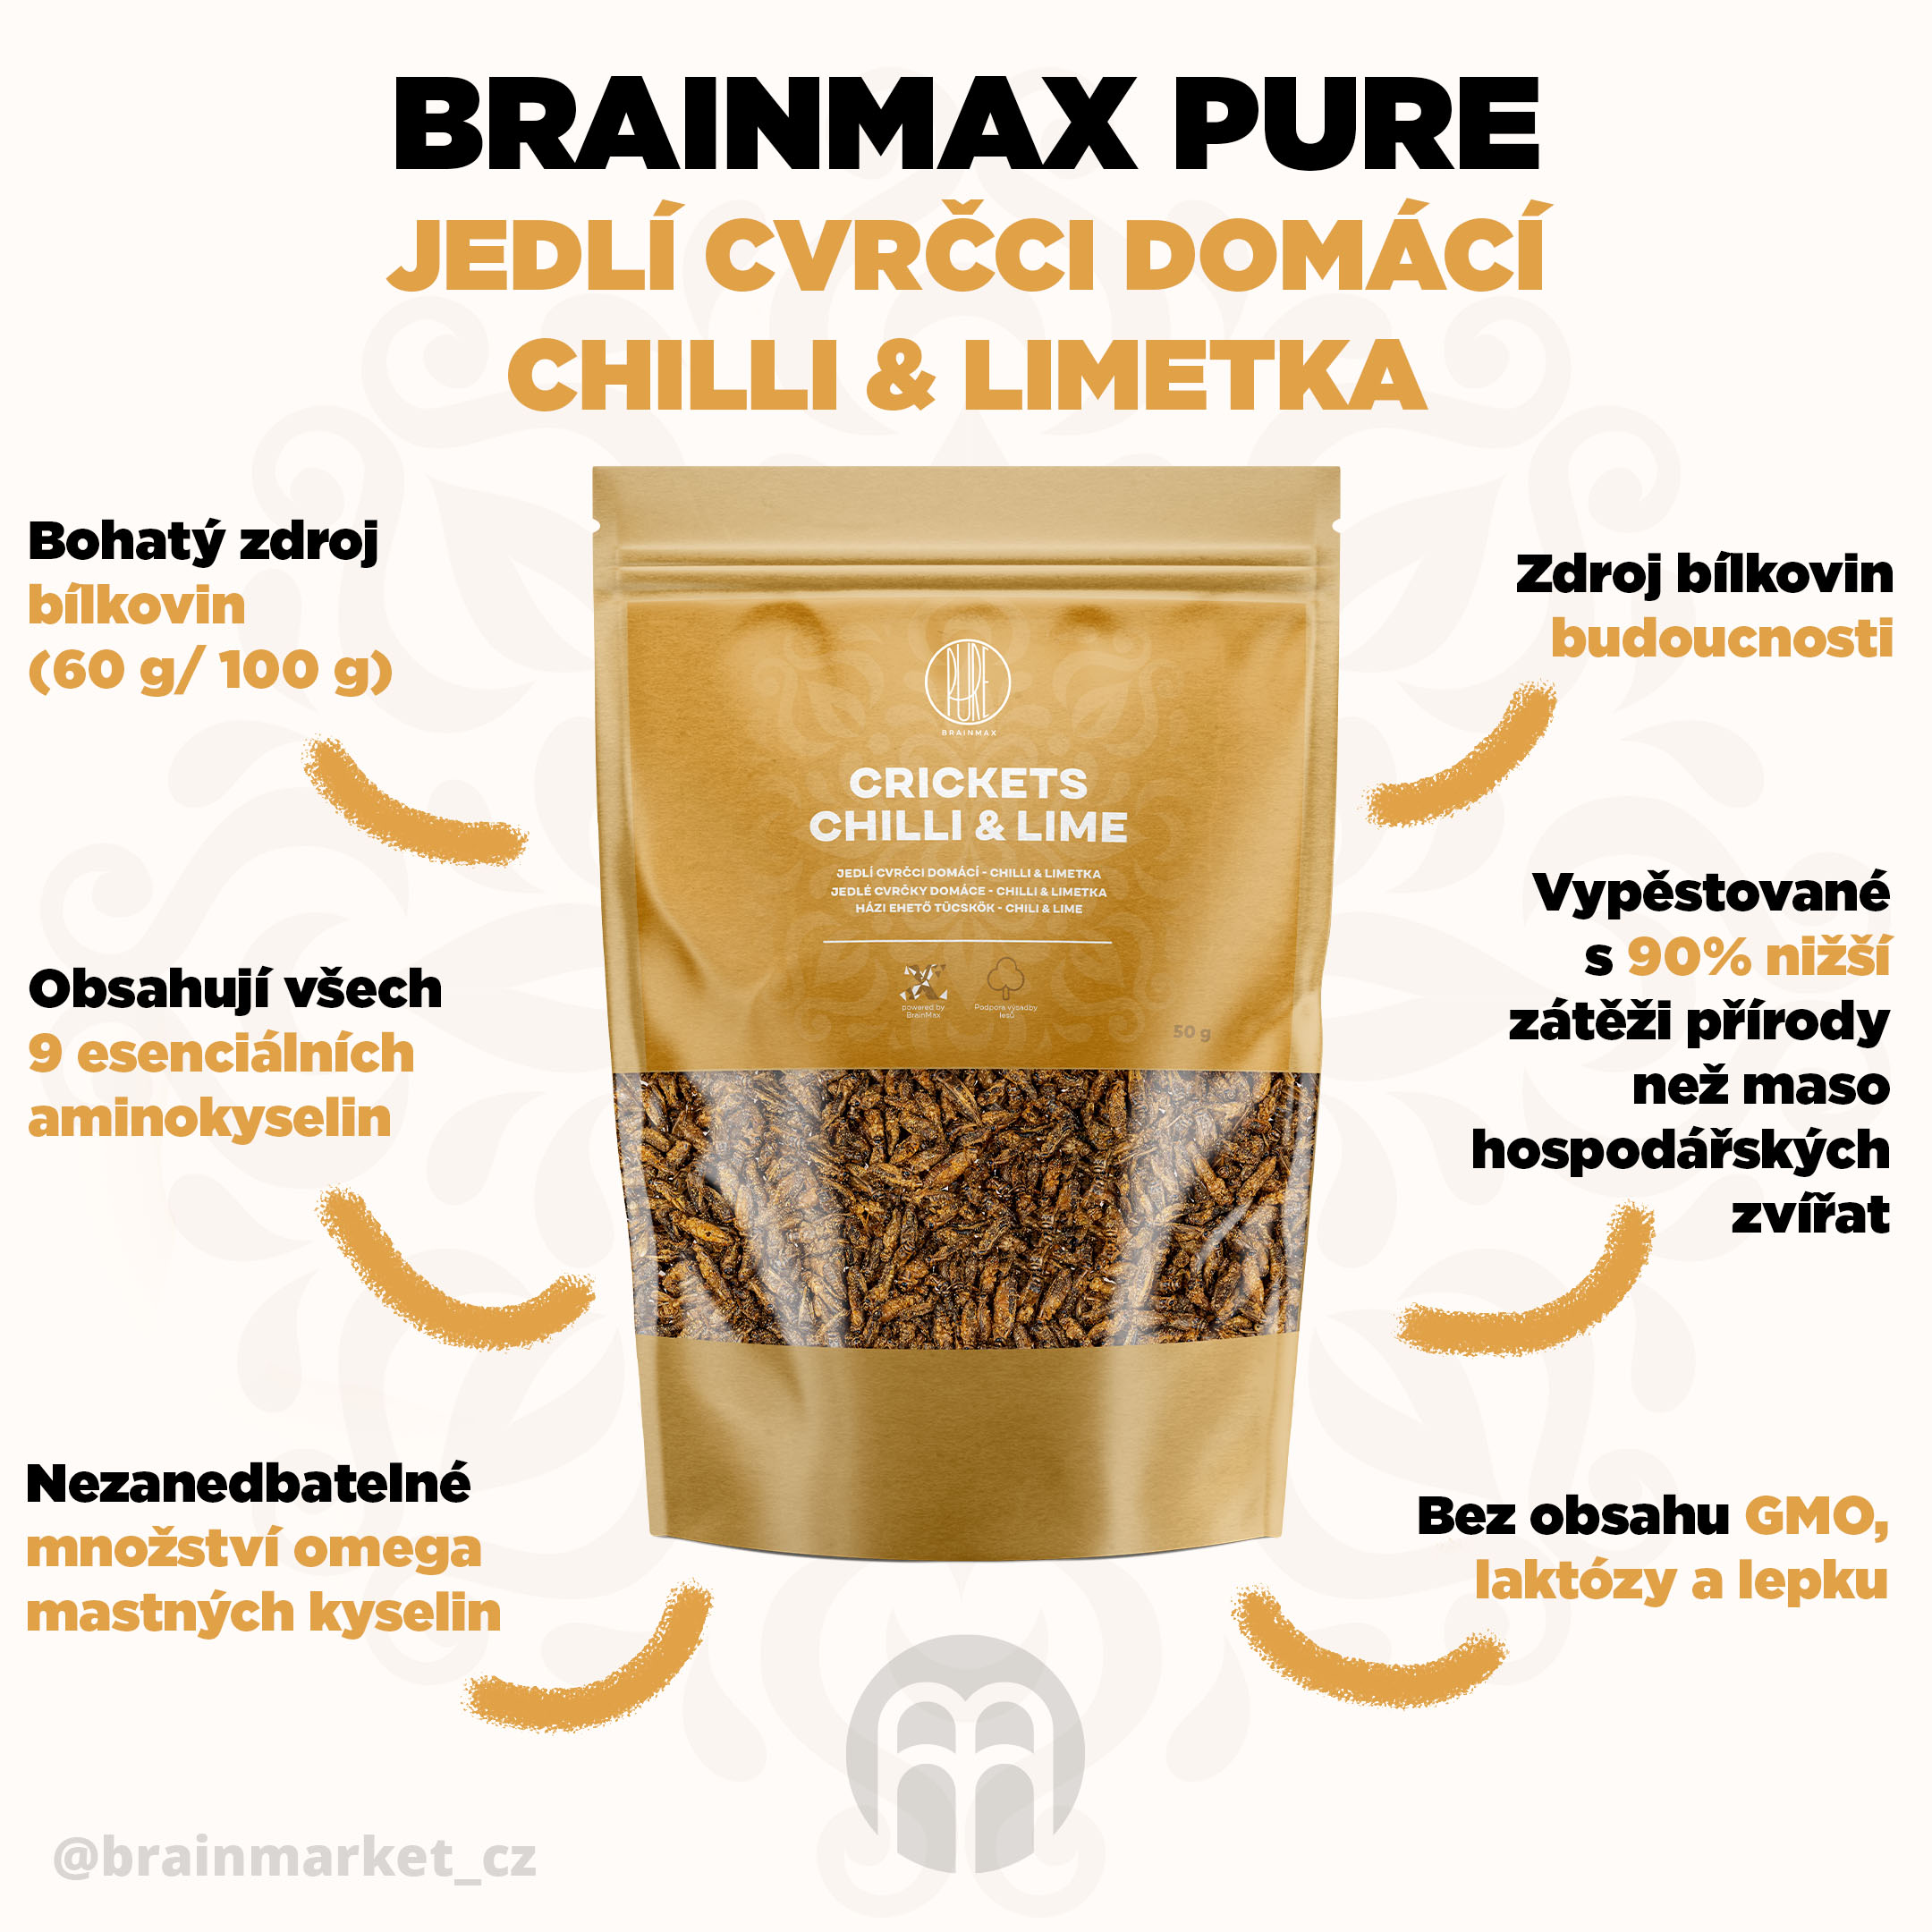 brainmax pure cvrcci chilli limetka infografika brainmarket CZ